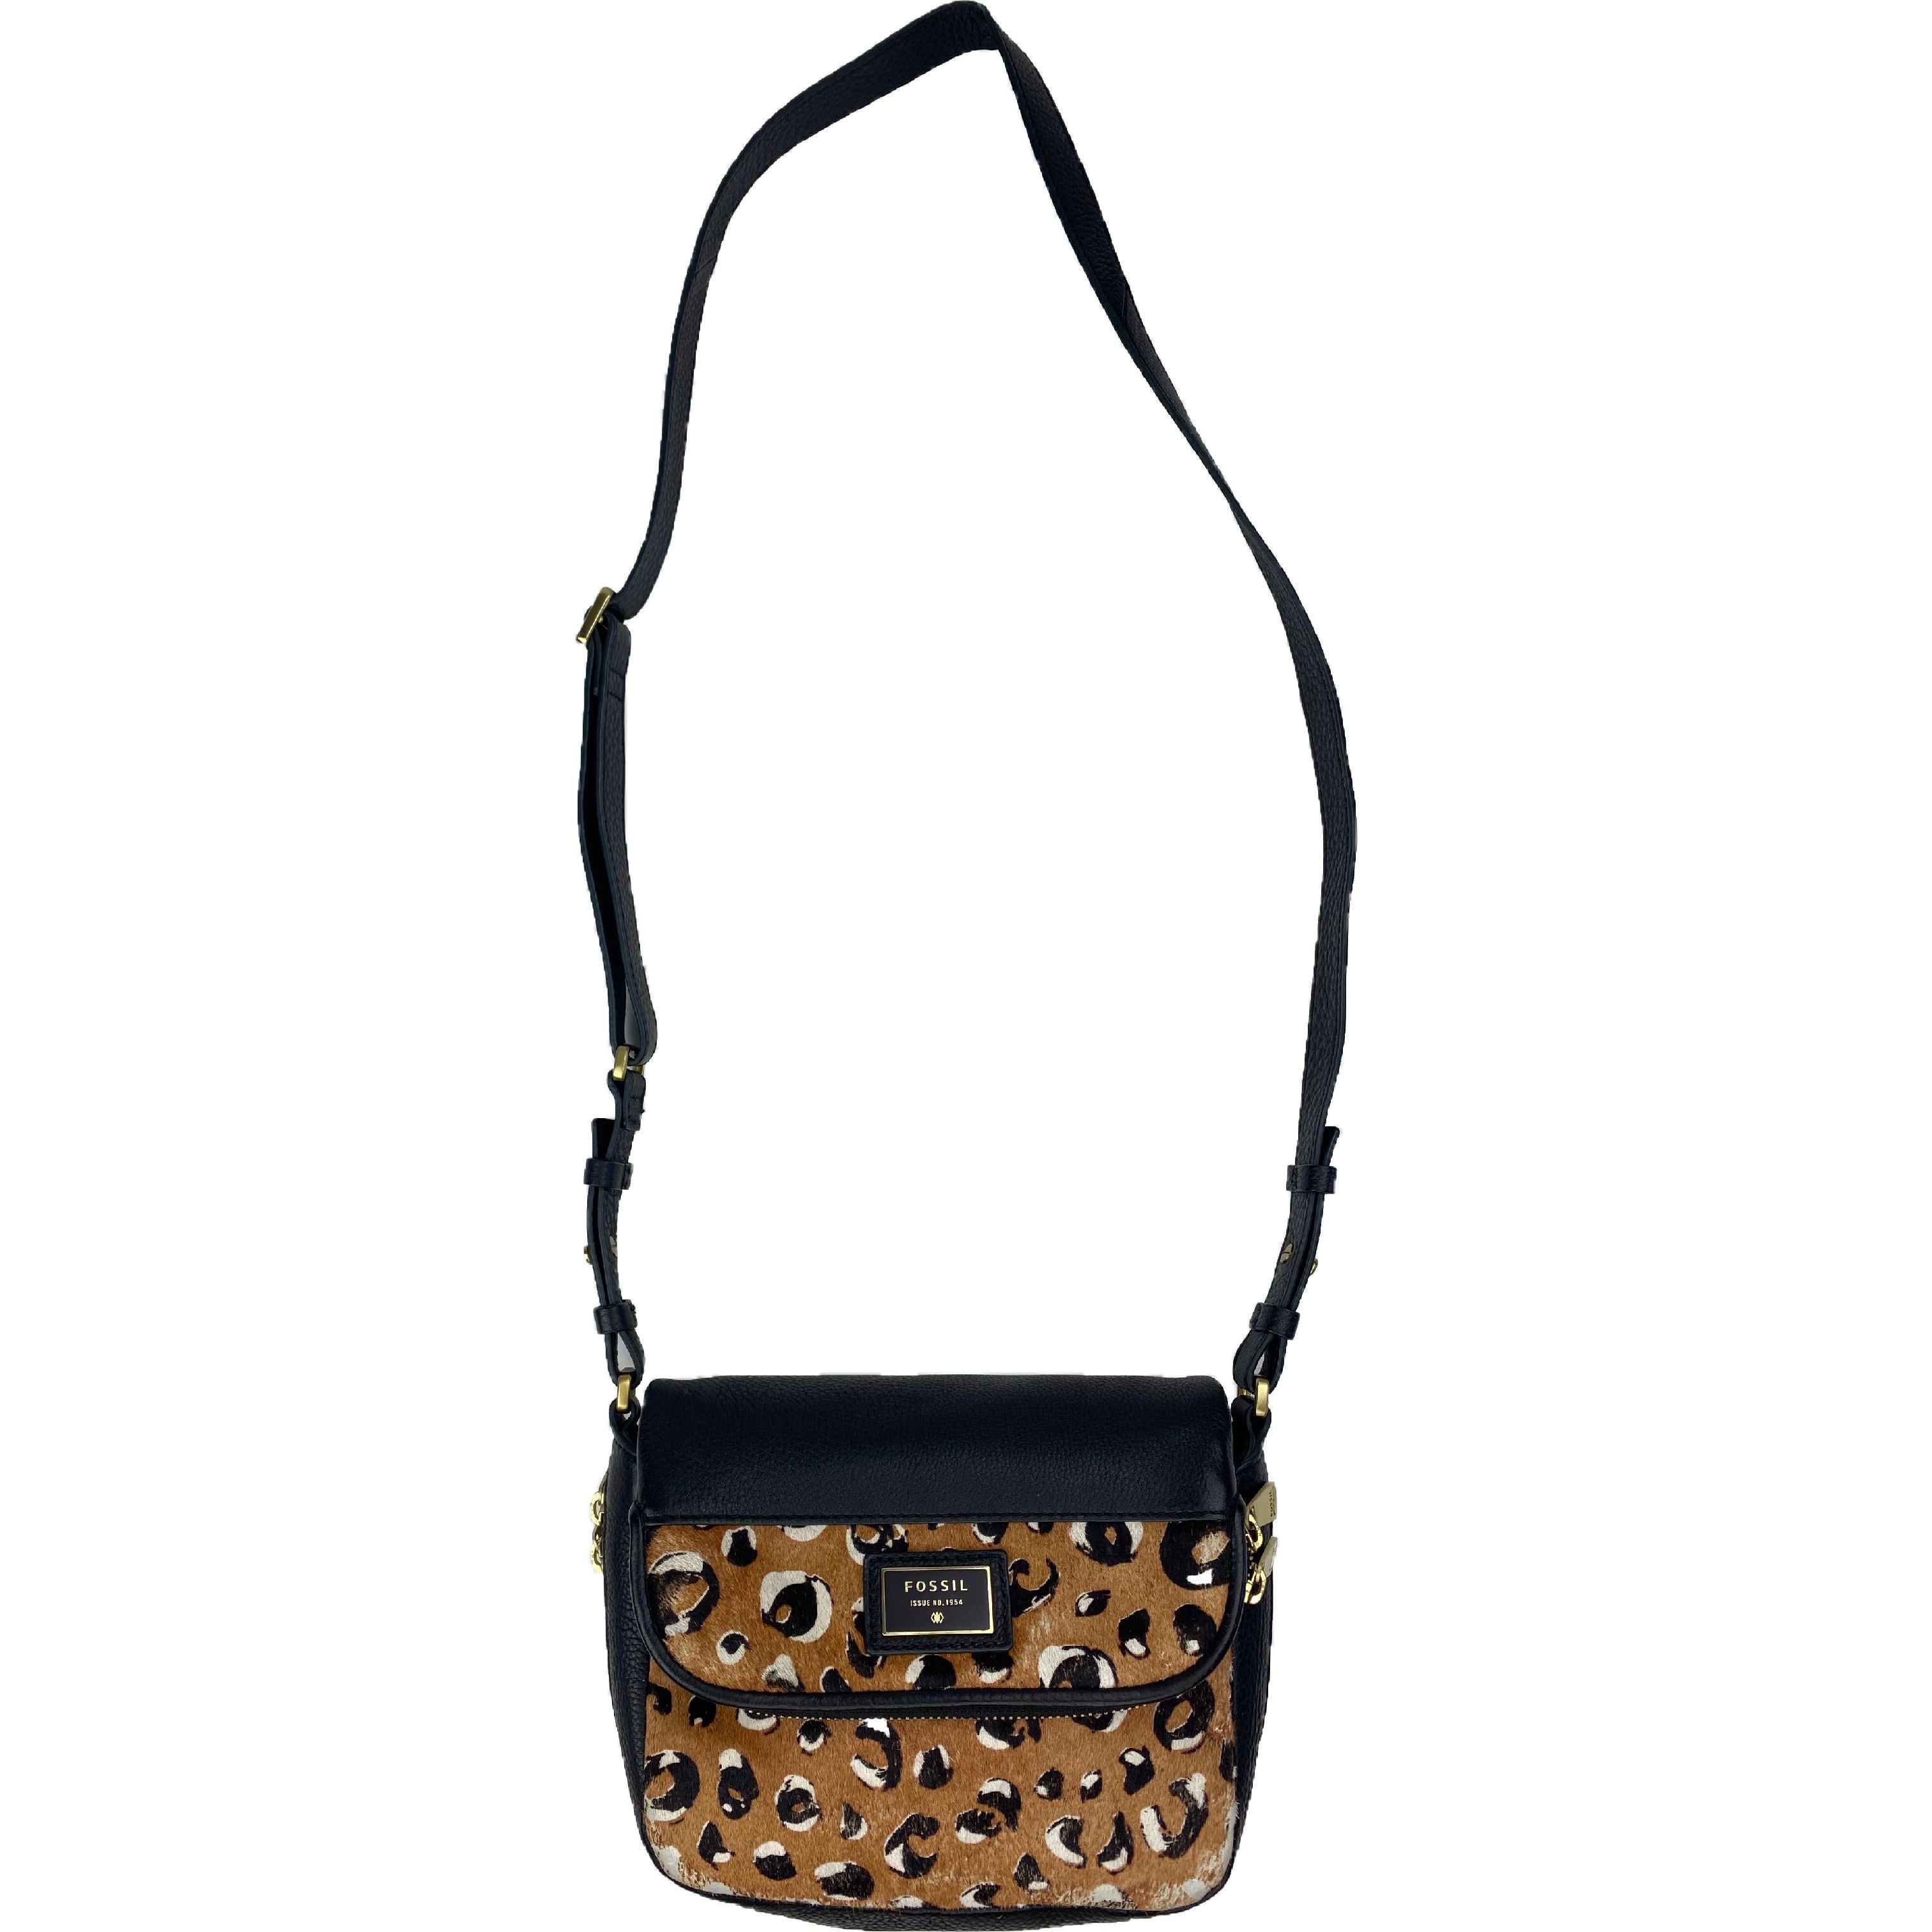 Zipper Purse - Tapestry Fabric Handbags & Accessories - Danny K.